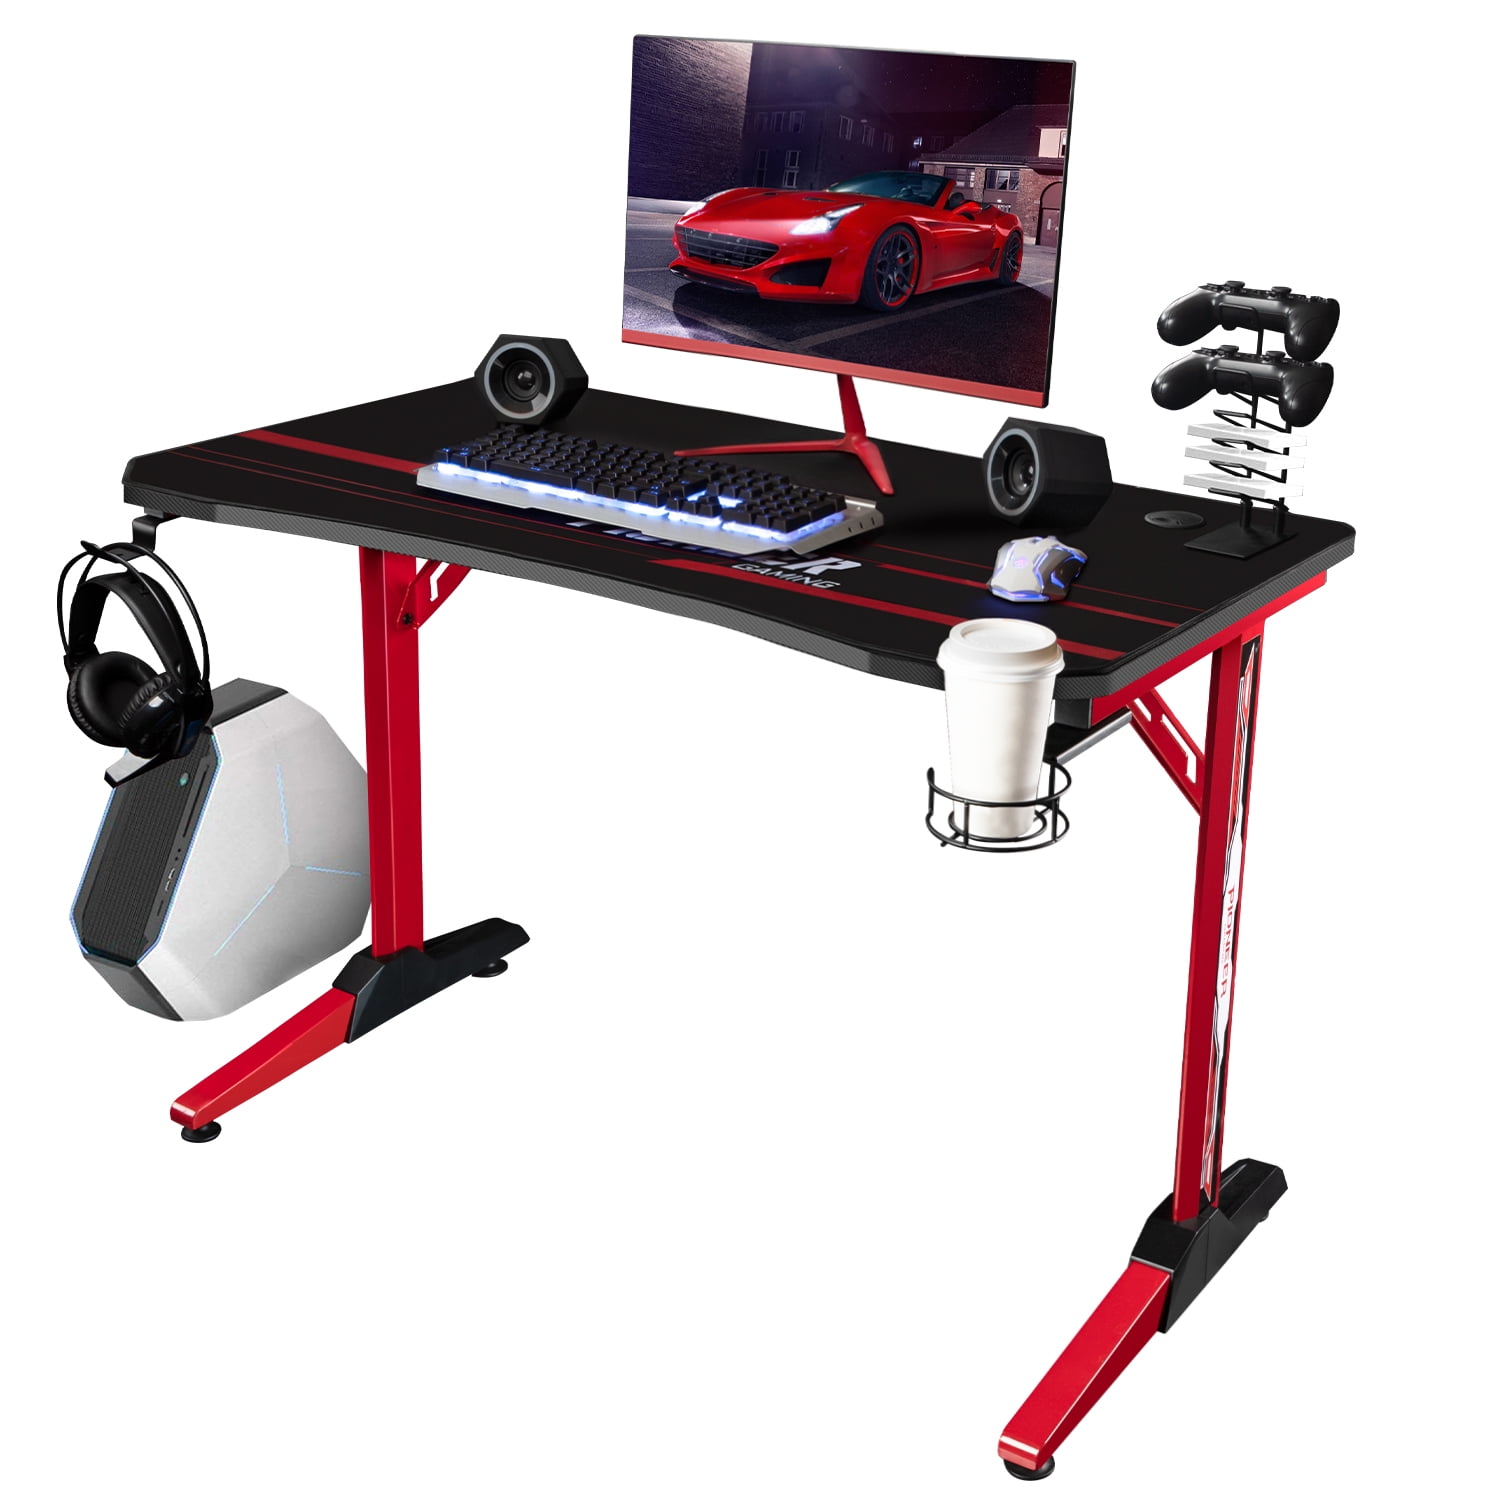 VINEEGO 43 inch Gaming Desk T Shaped Legs Carbon Fiber 